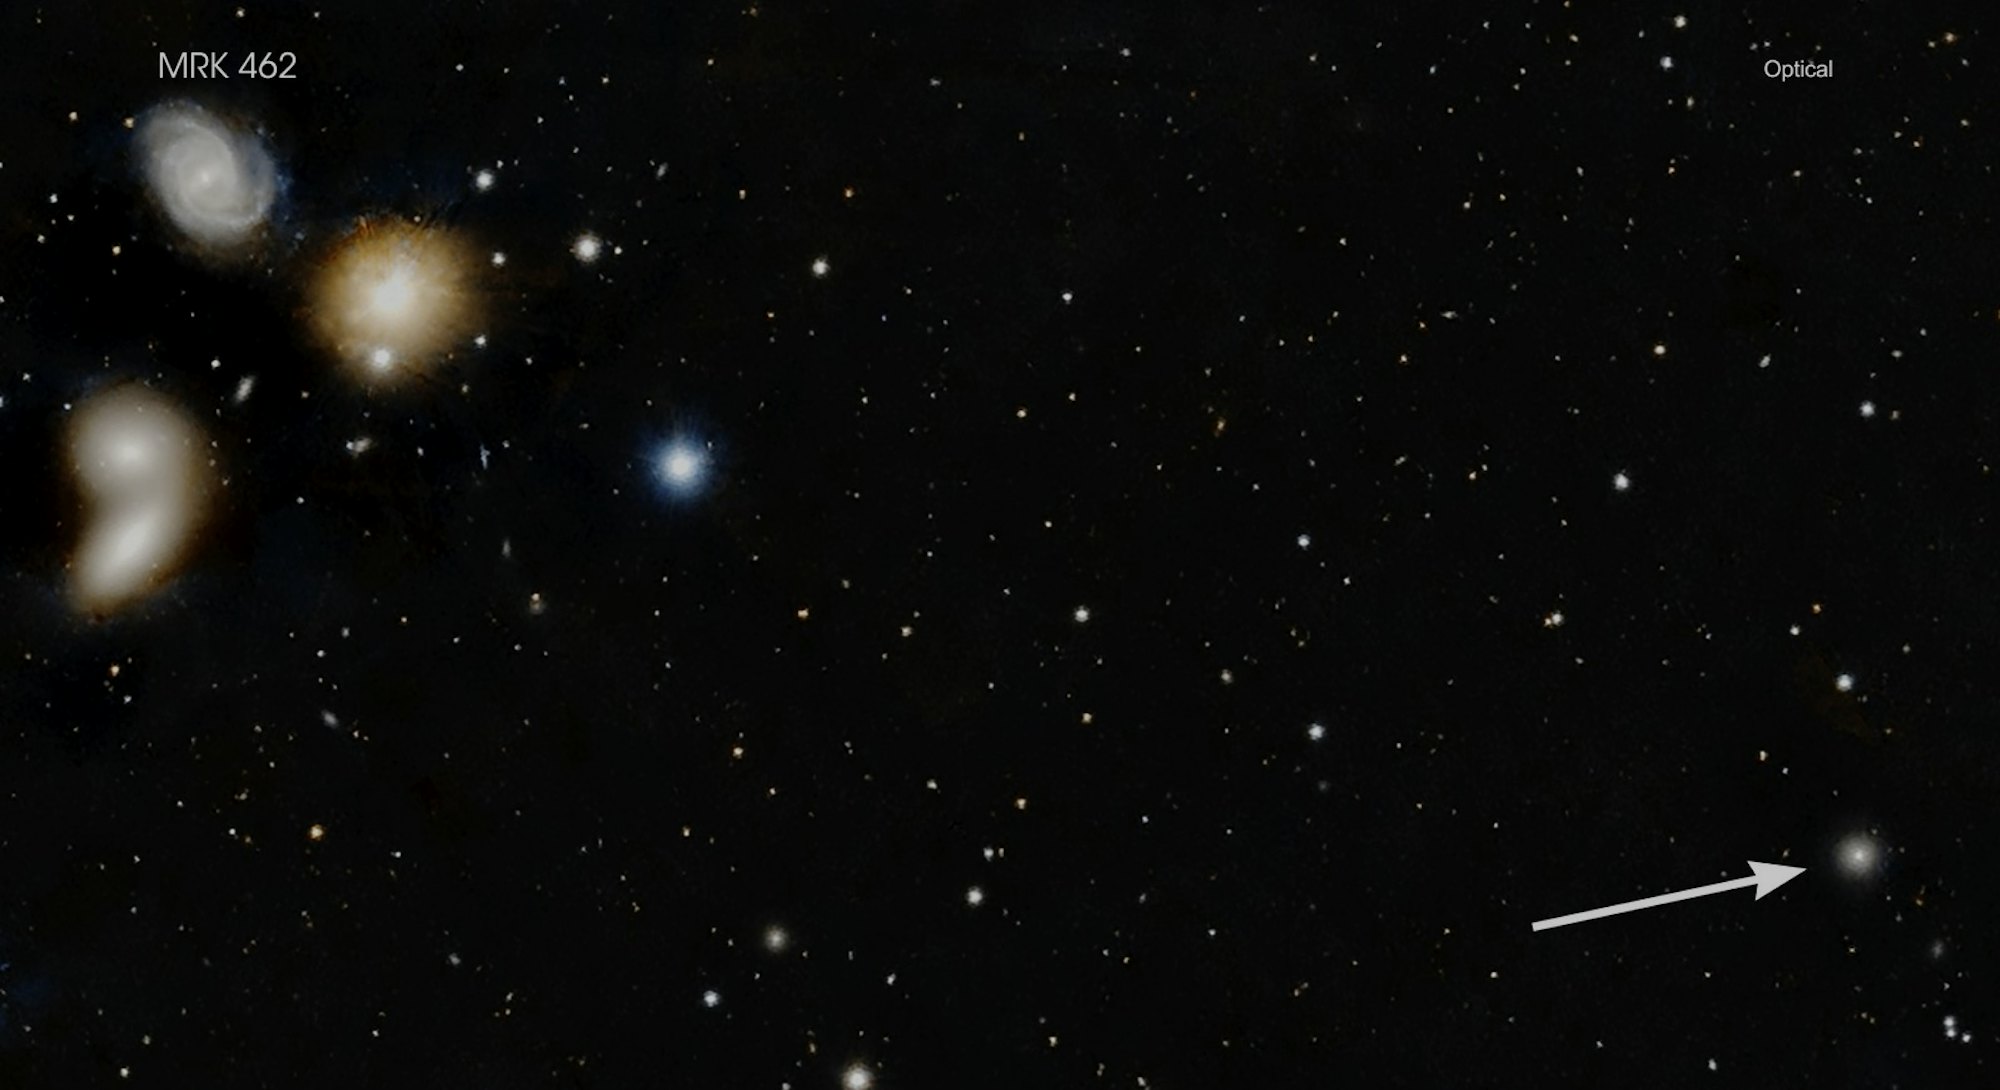 Galaxies nearby Mrk 462